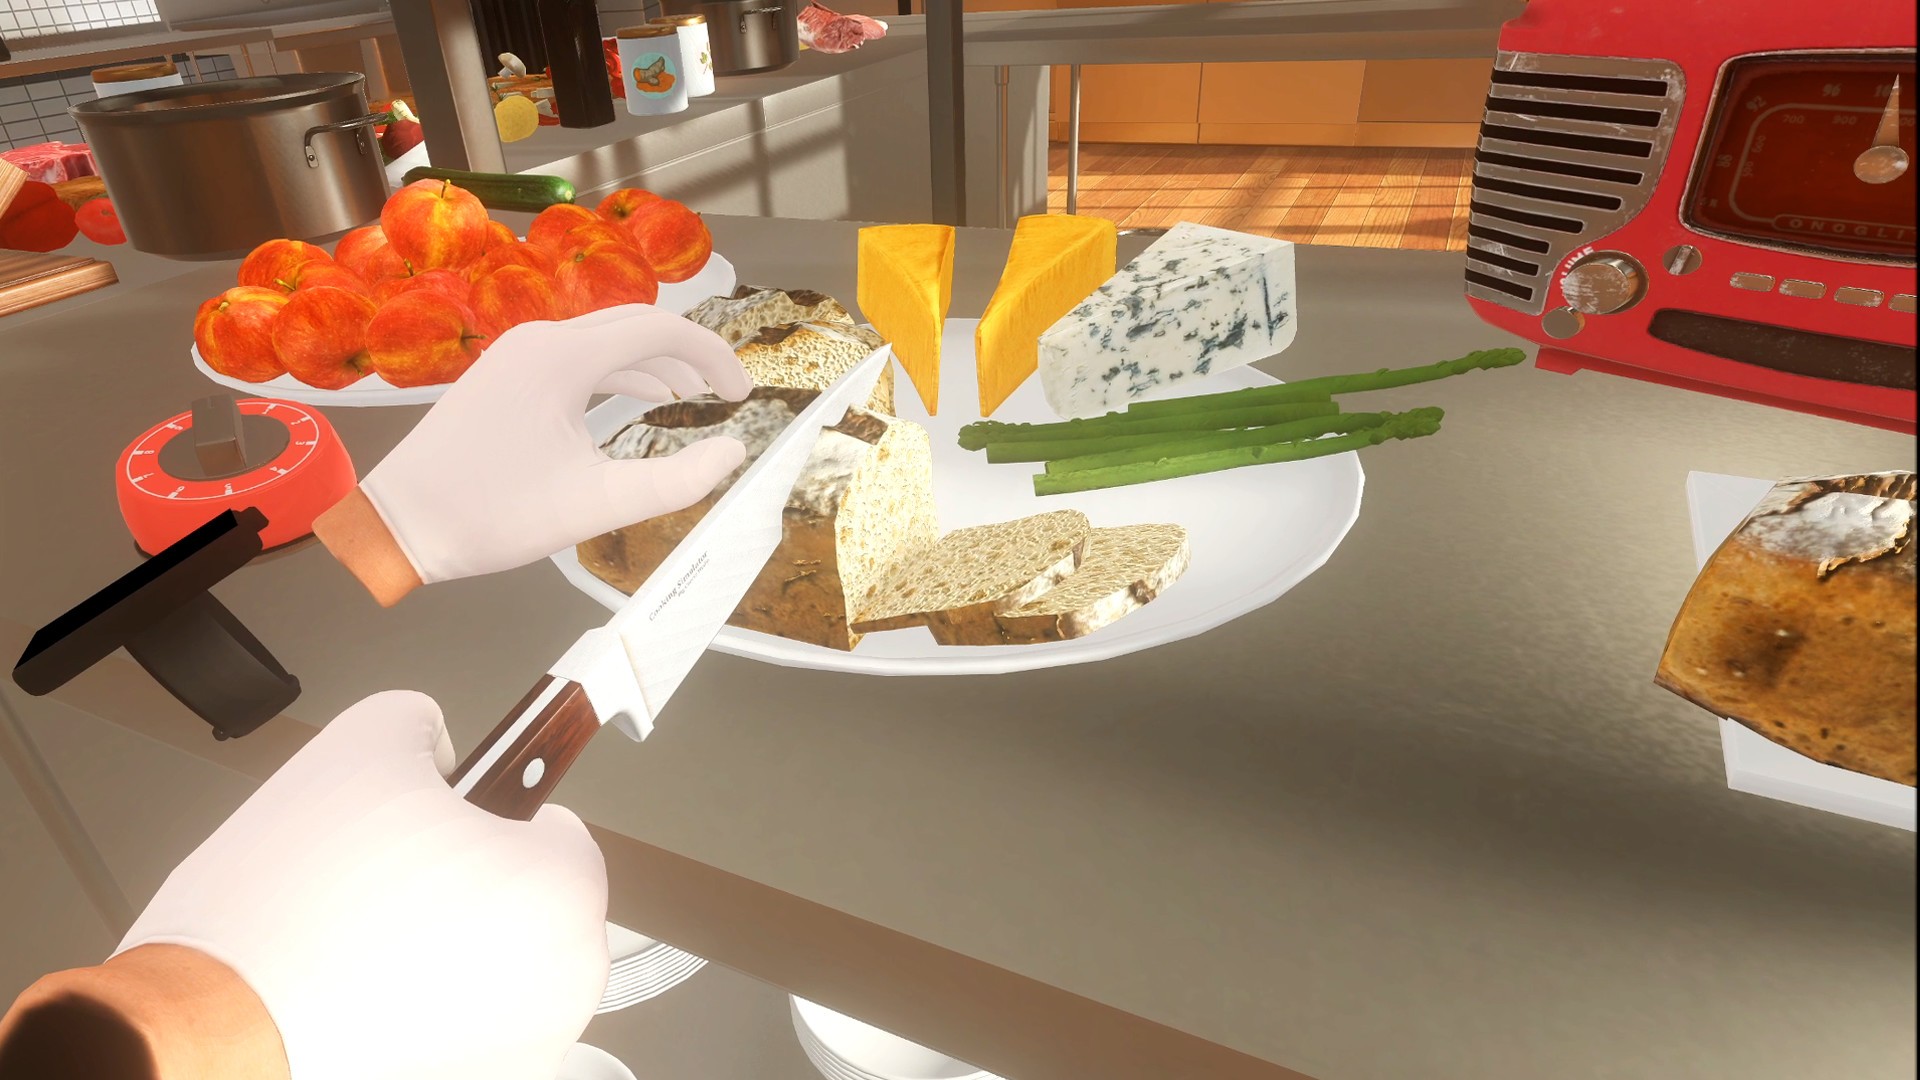 Comprar Cooking Simulator VR Steam